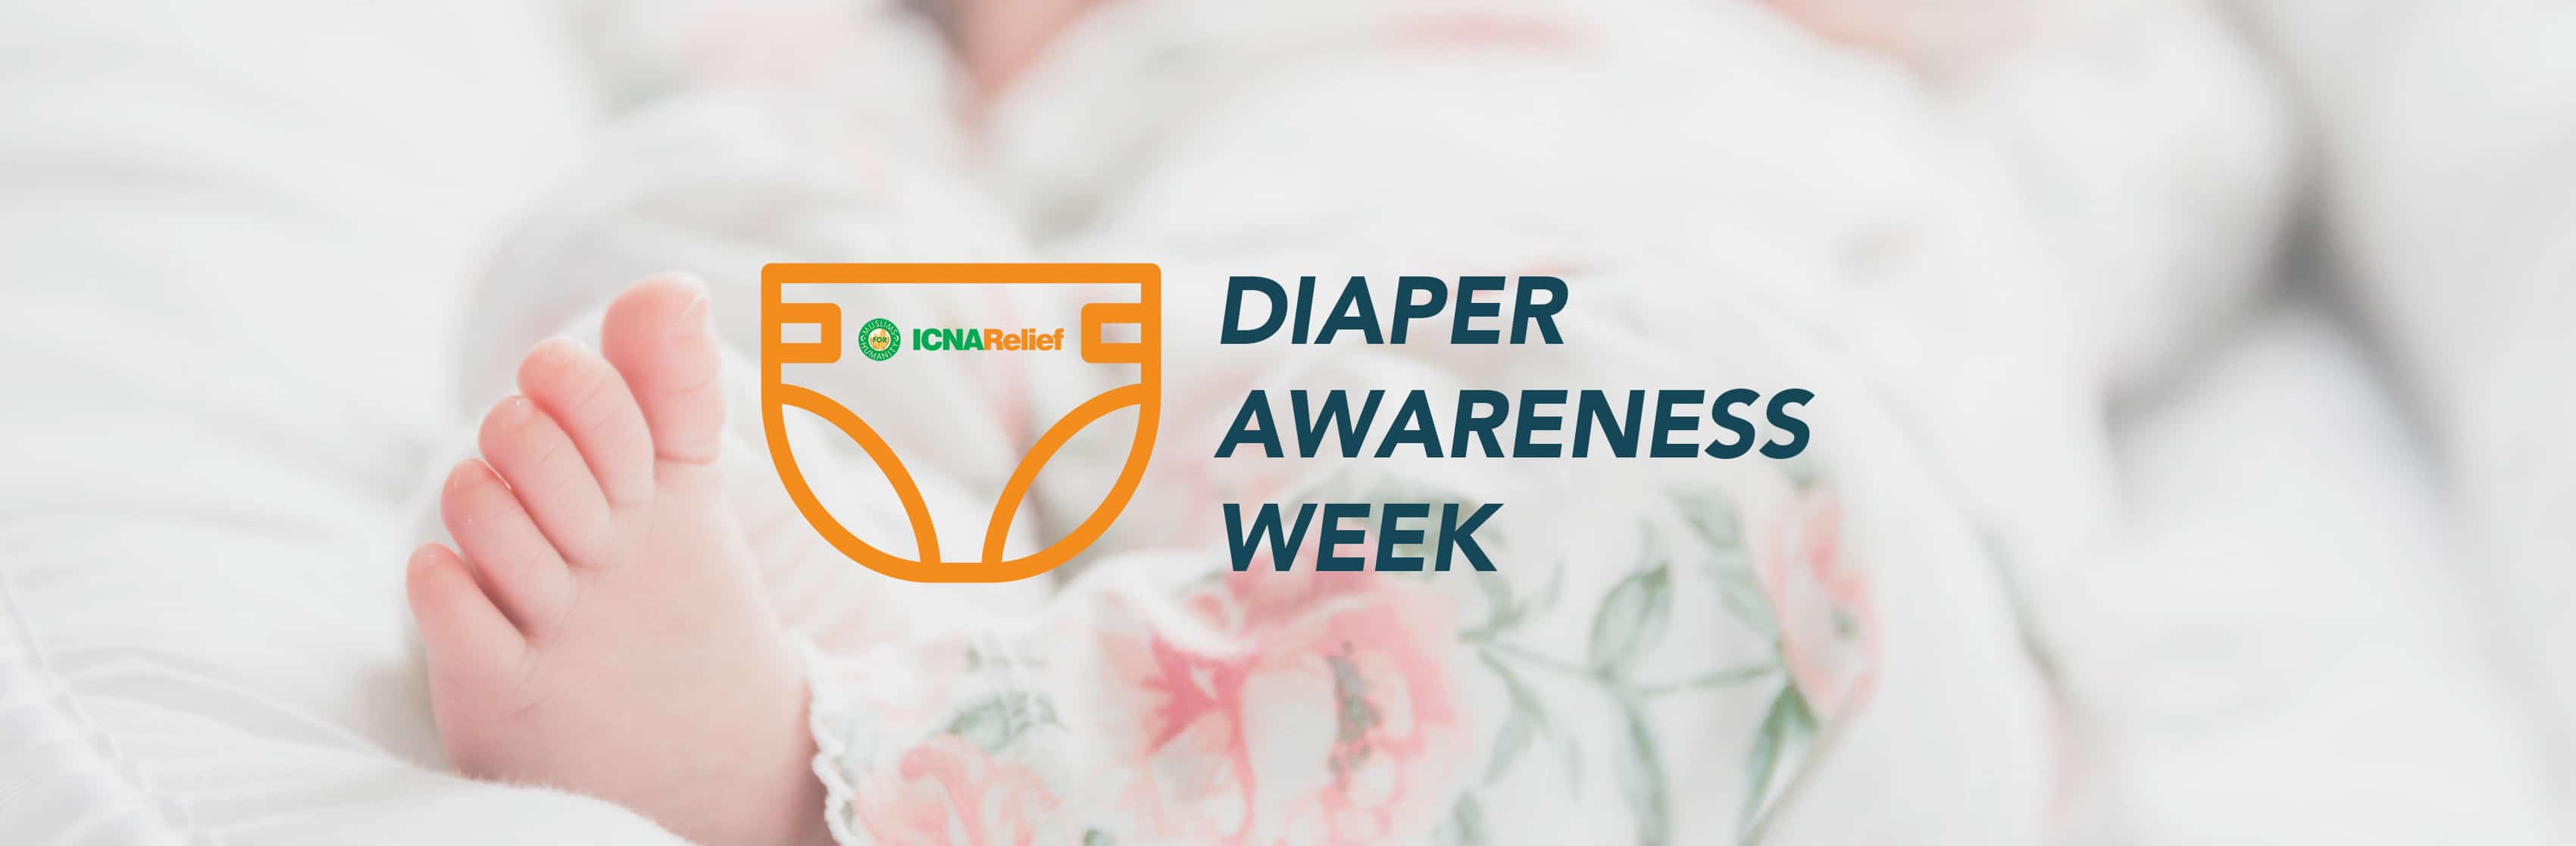 Diaper Awareness Week ICNA Relief USA